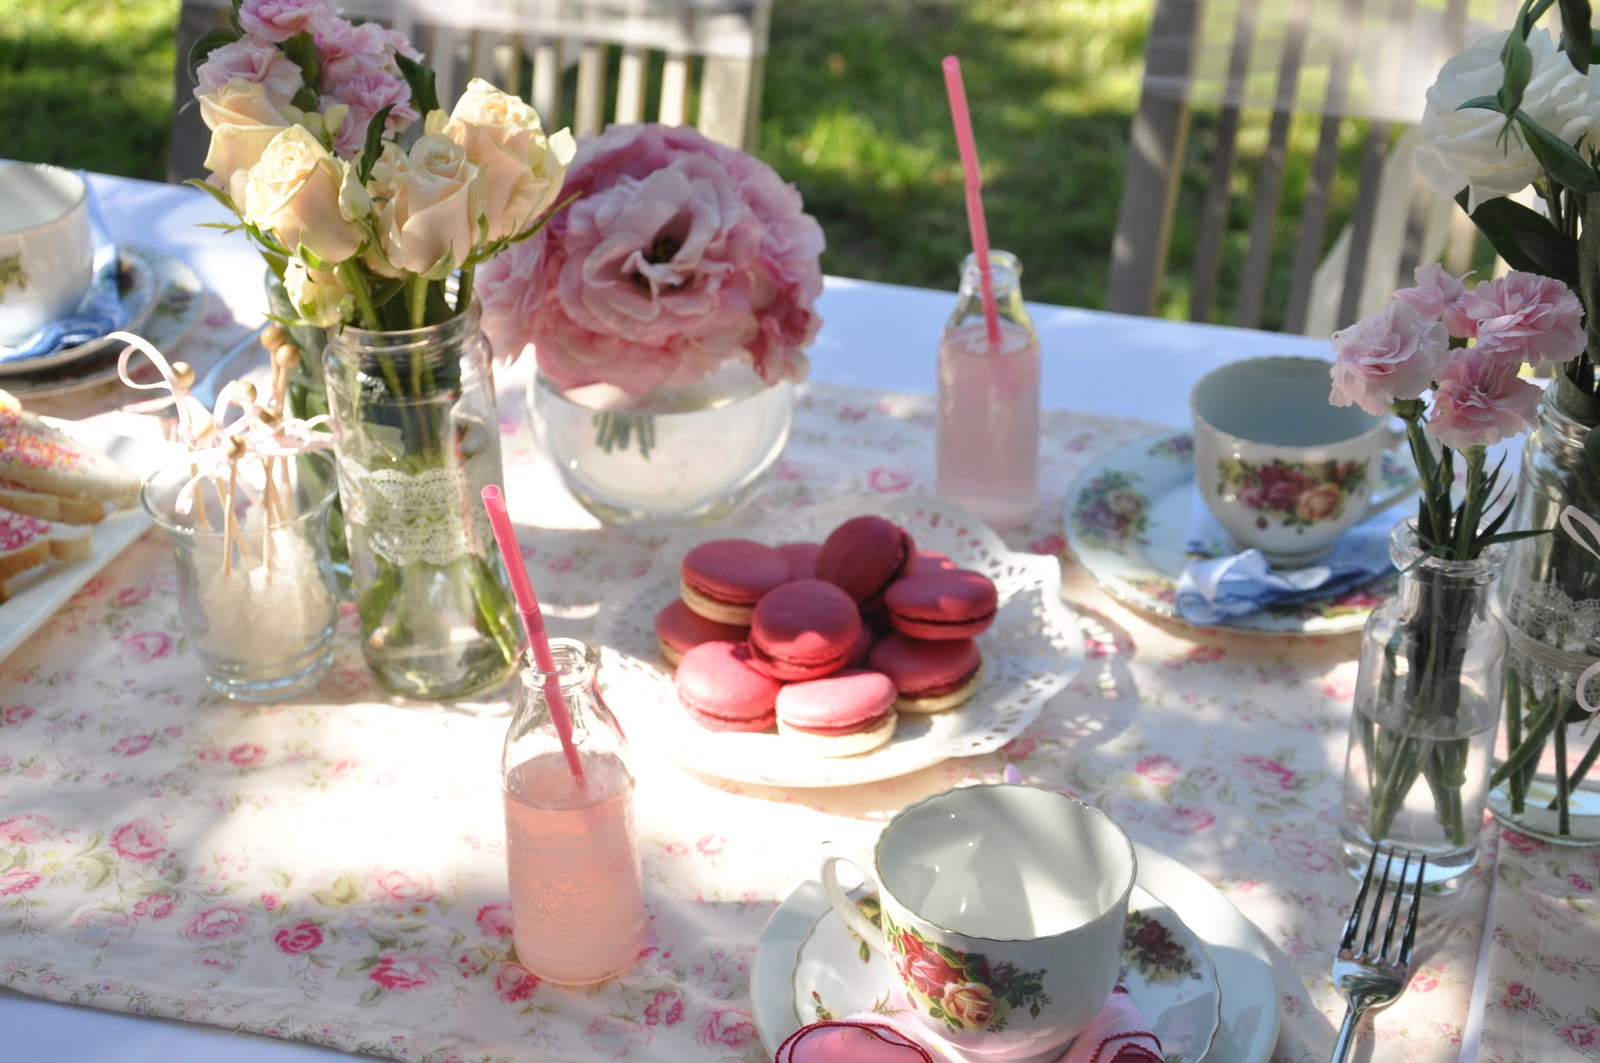 Summer Afternoon Tea Party Ideas
 The Vintage Garden Tea Party Asian Wedding Ideas Summer